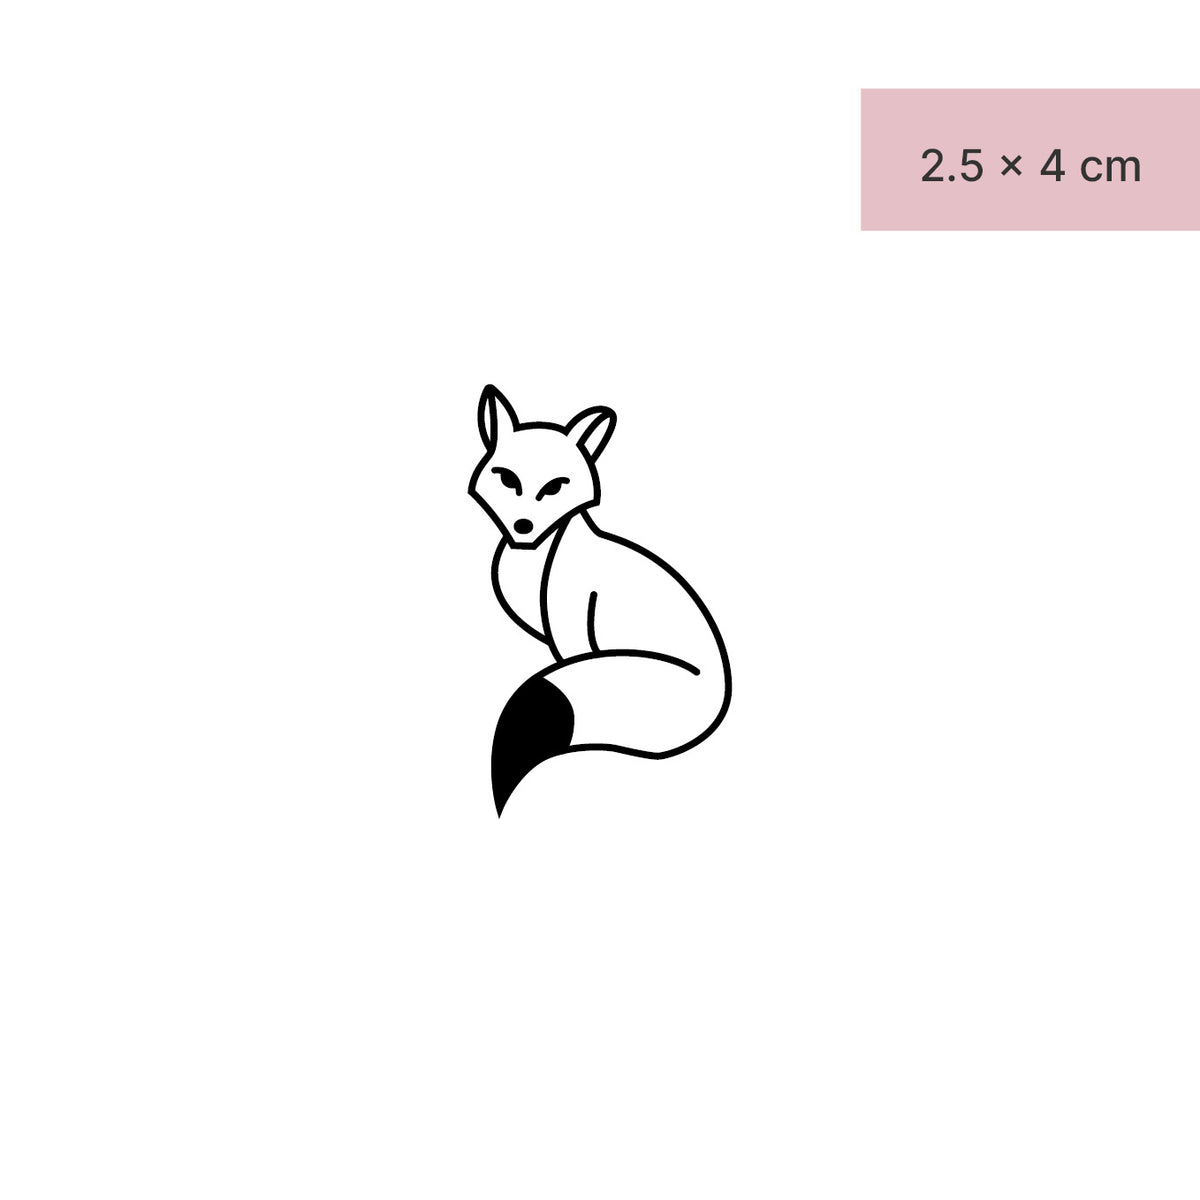 Outline fox tattoo - Tattoogrid.net